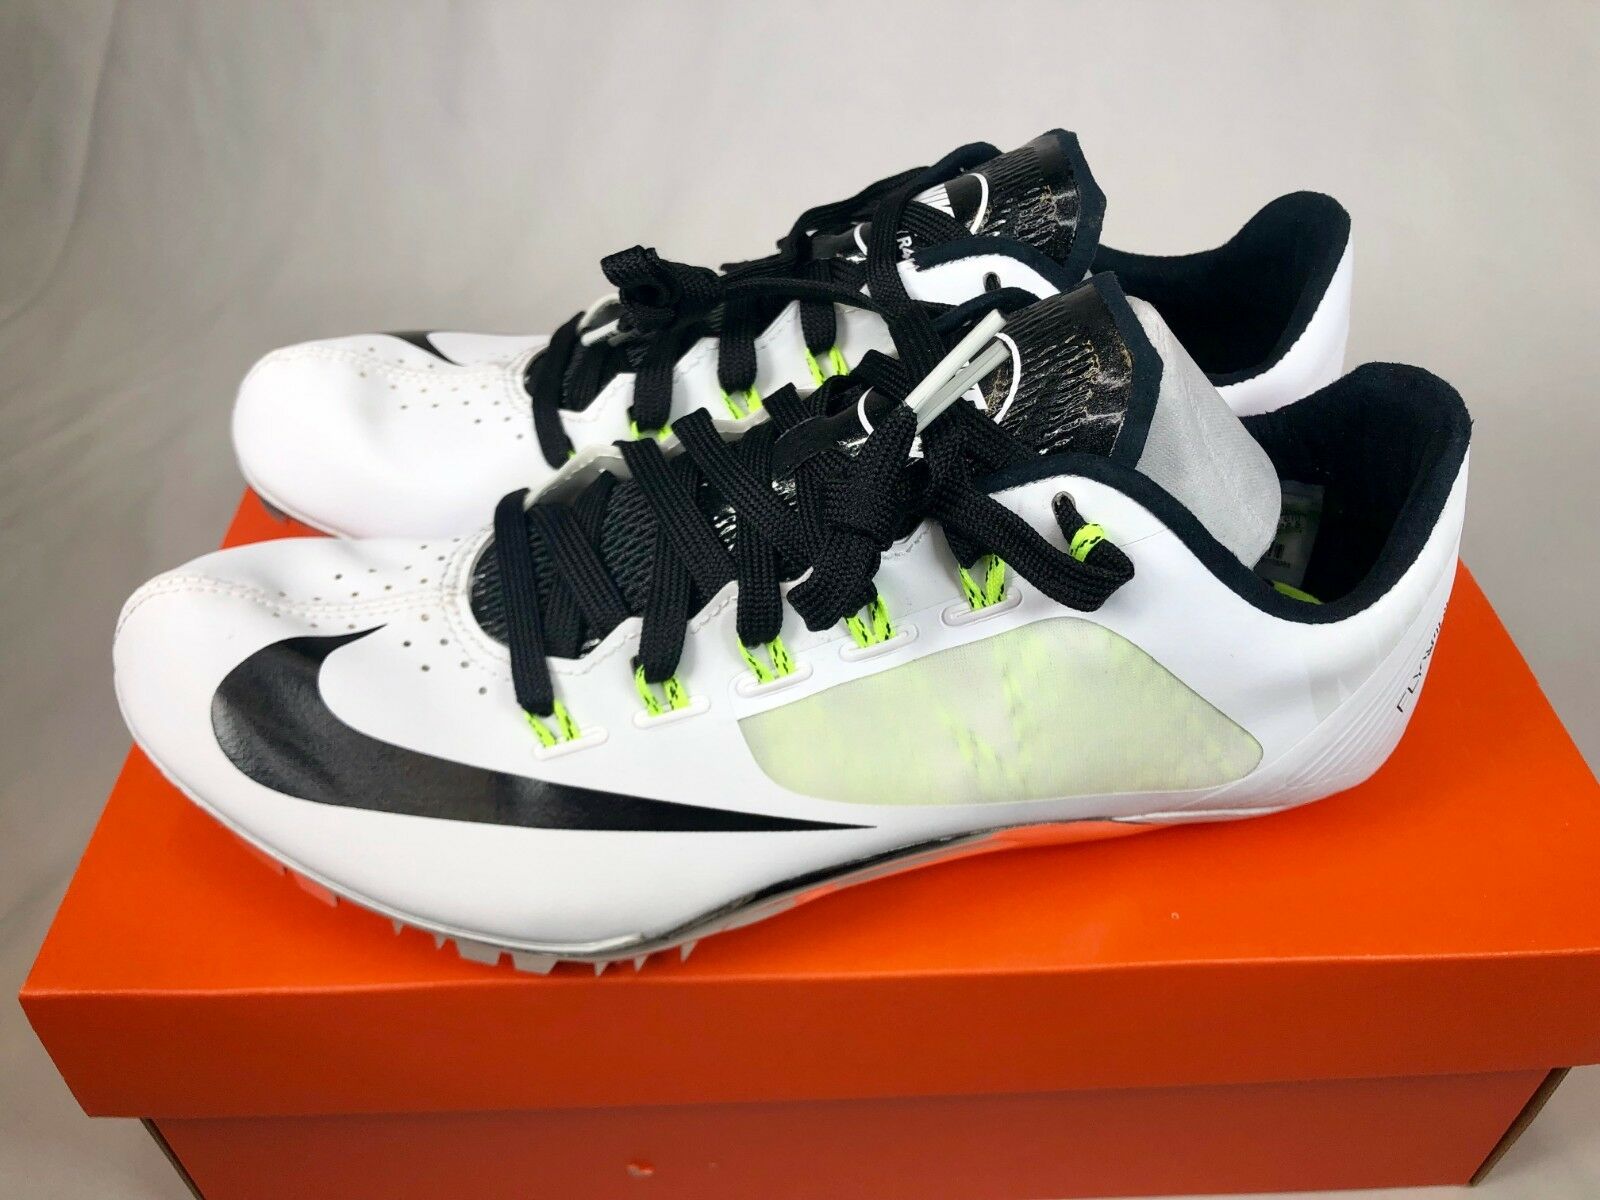 New Nike Zoom Superfly R4 Spikes Unisex Many Sizes White Black Volt